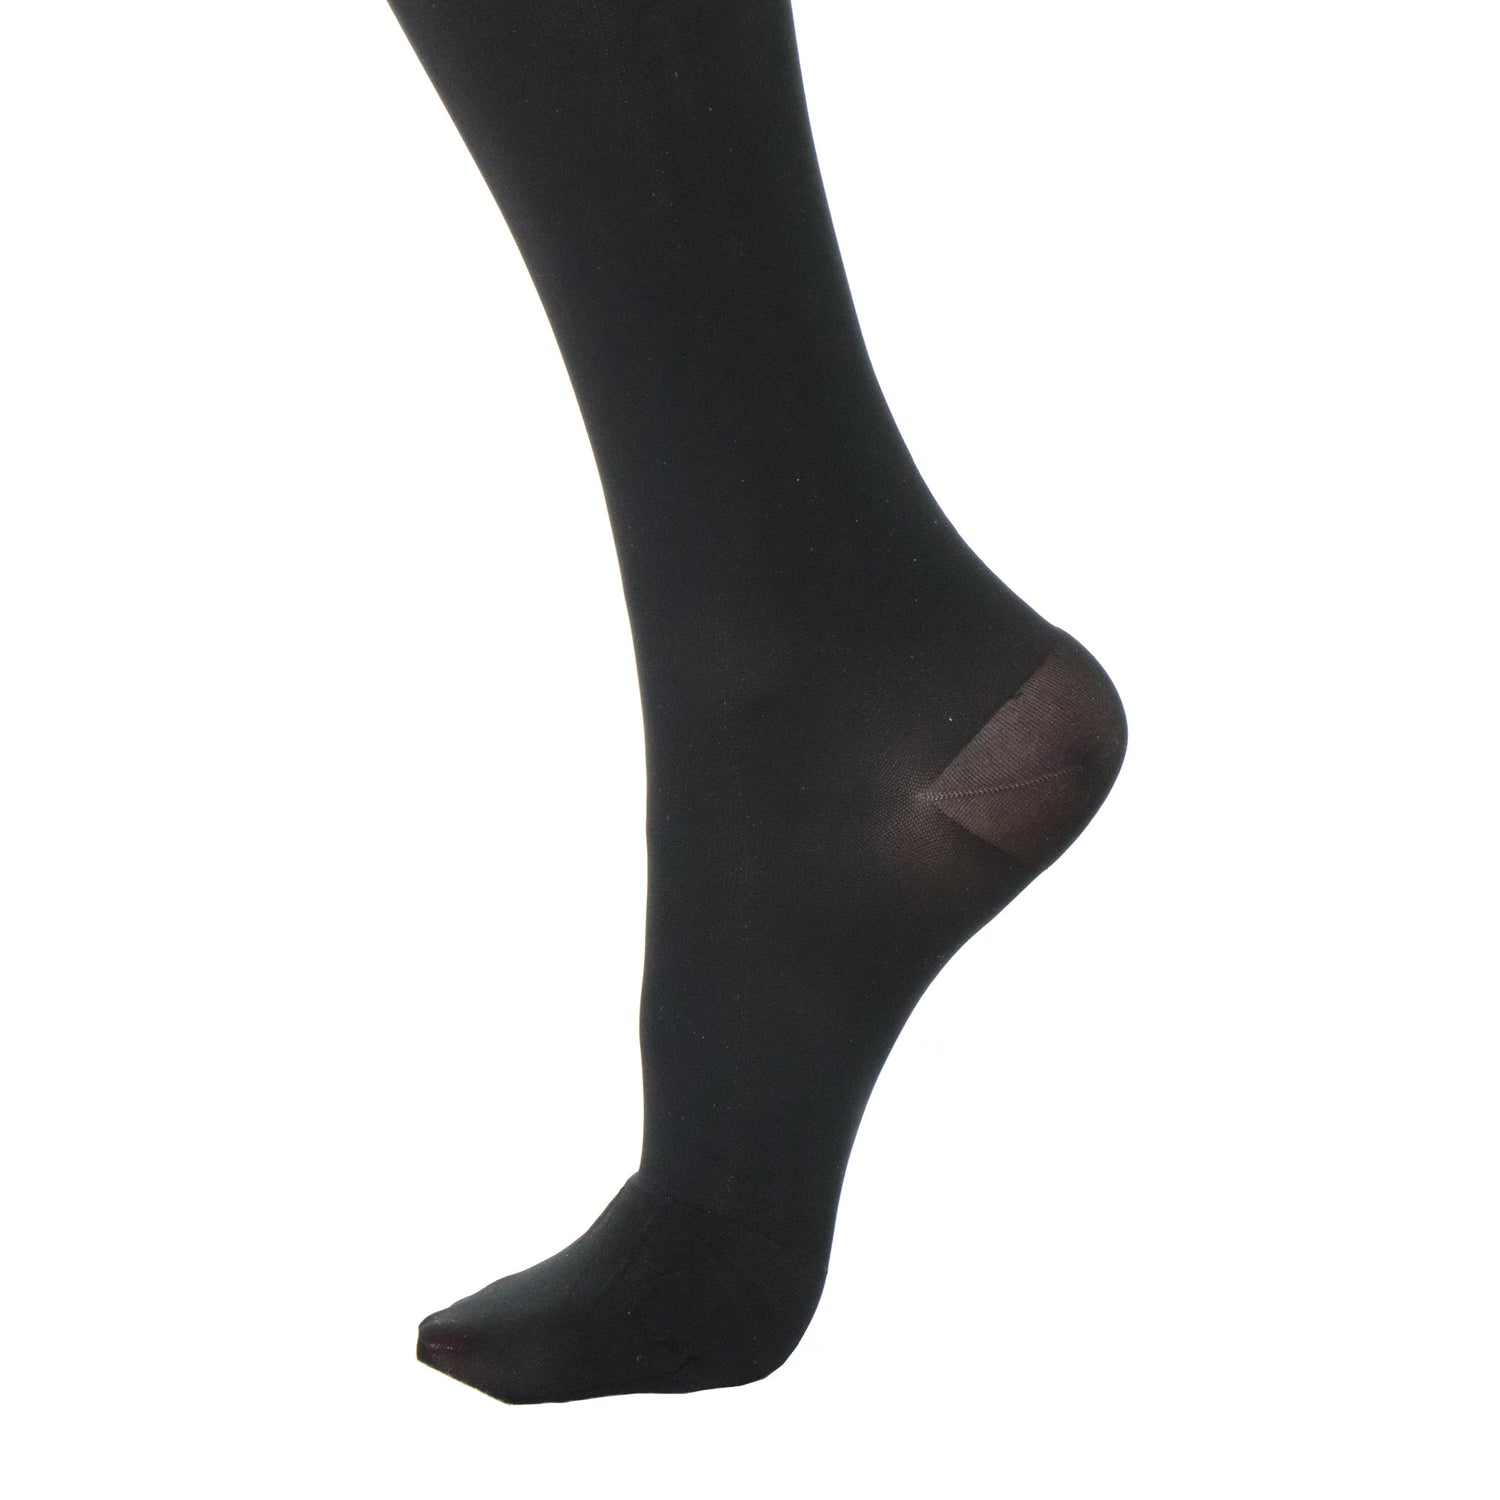 30 40 mmHg - Knee High Women's Compression Socks